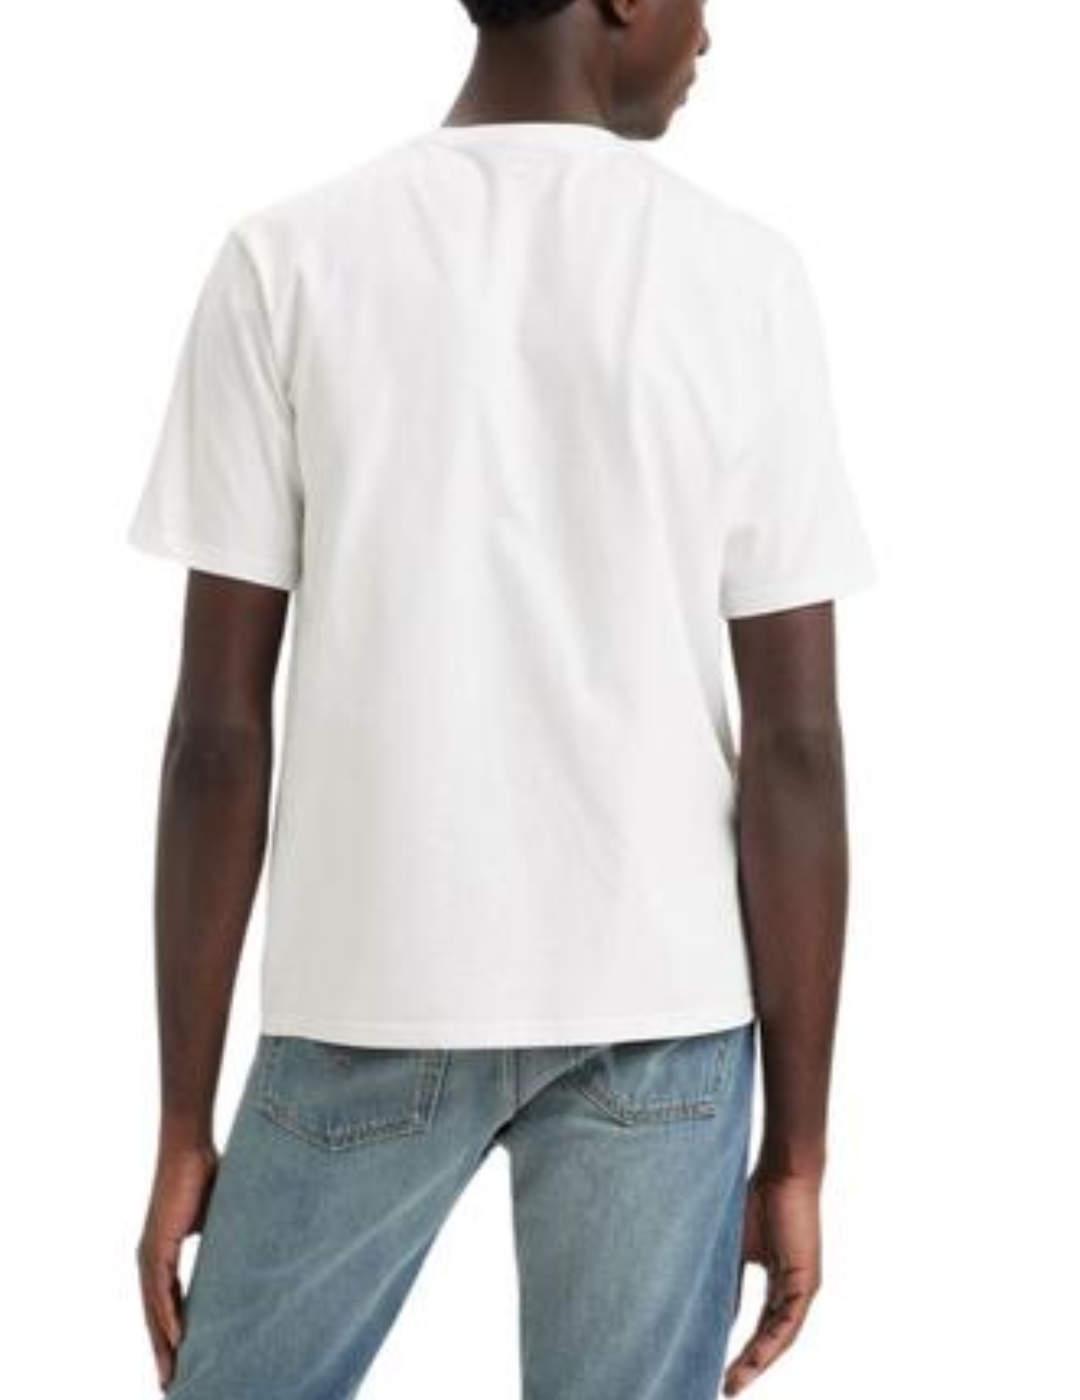 Camiseta Levi's relaxed color blanca logo multicolor hombre